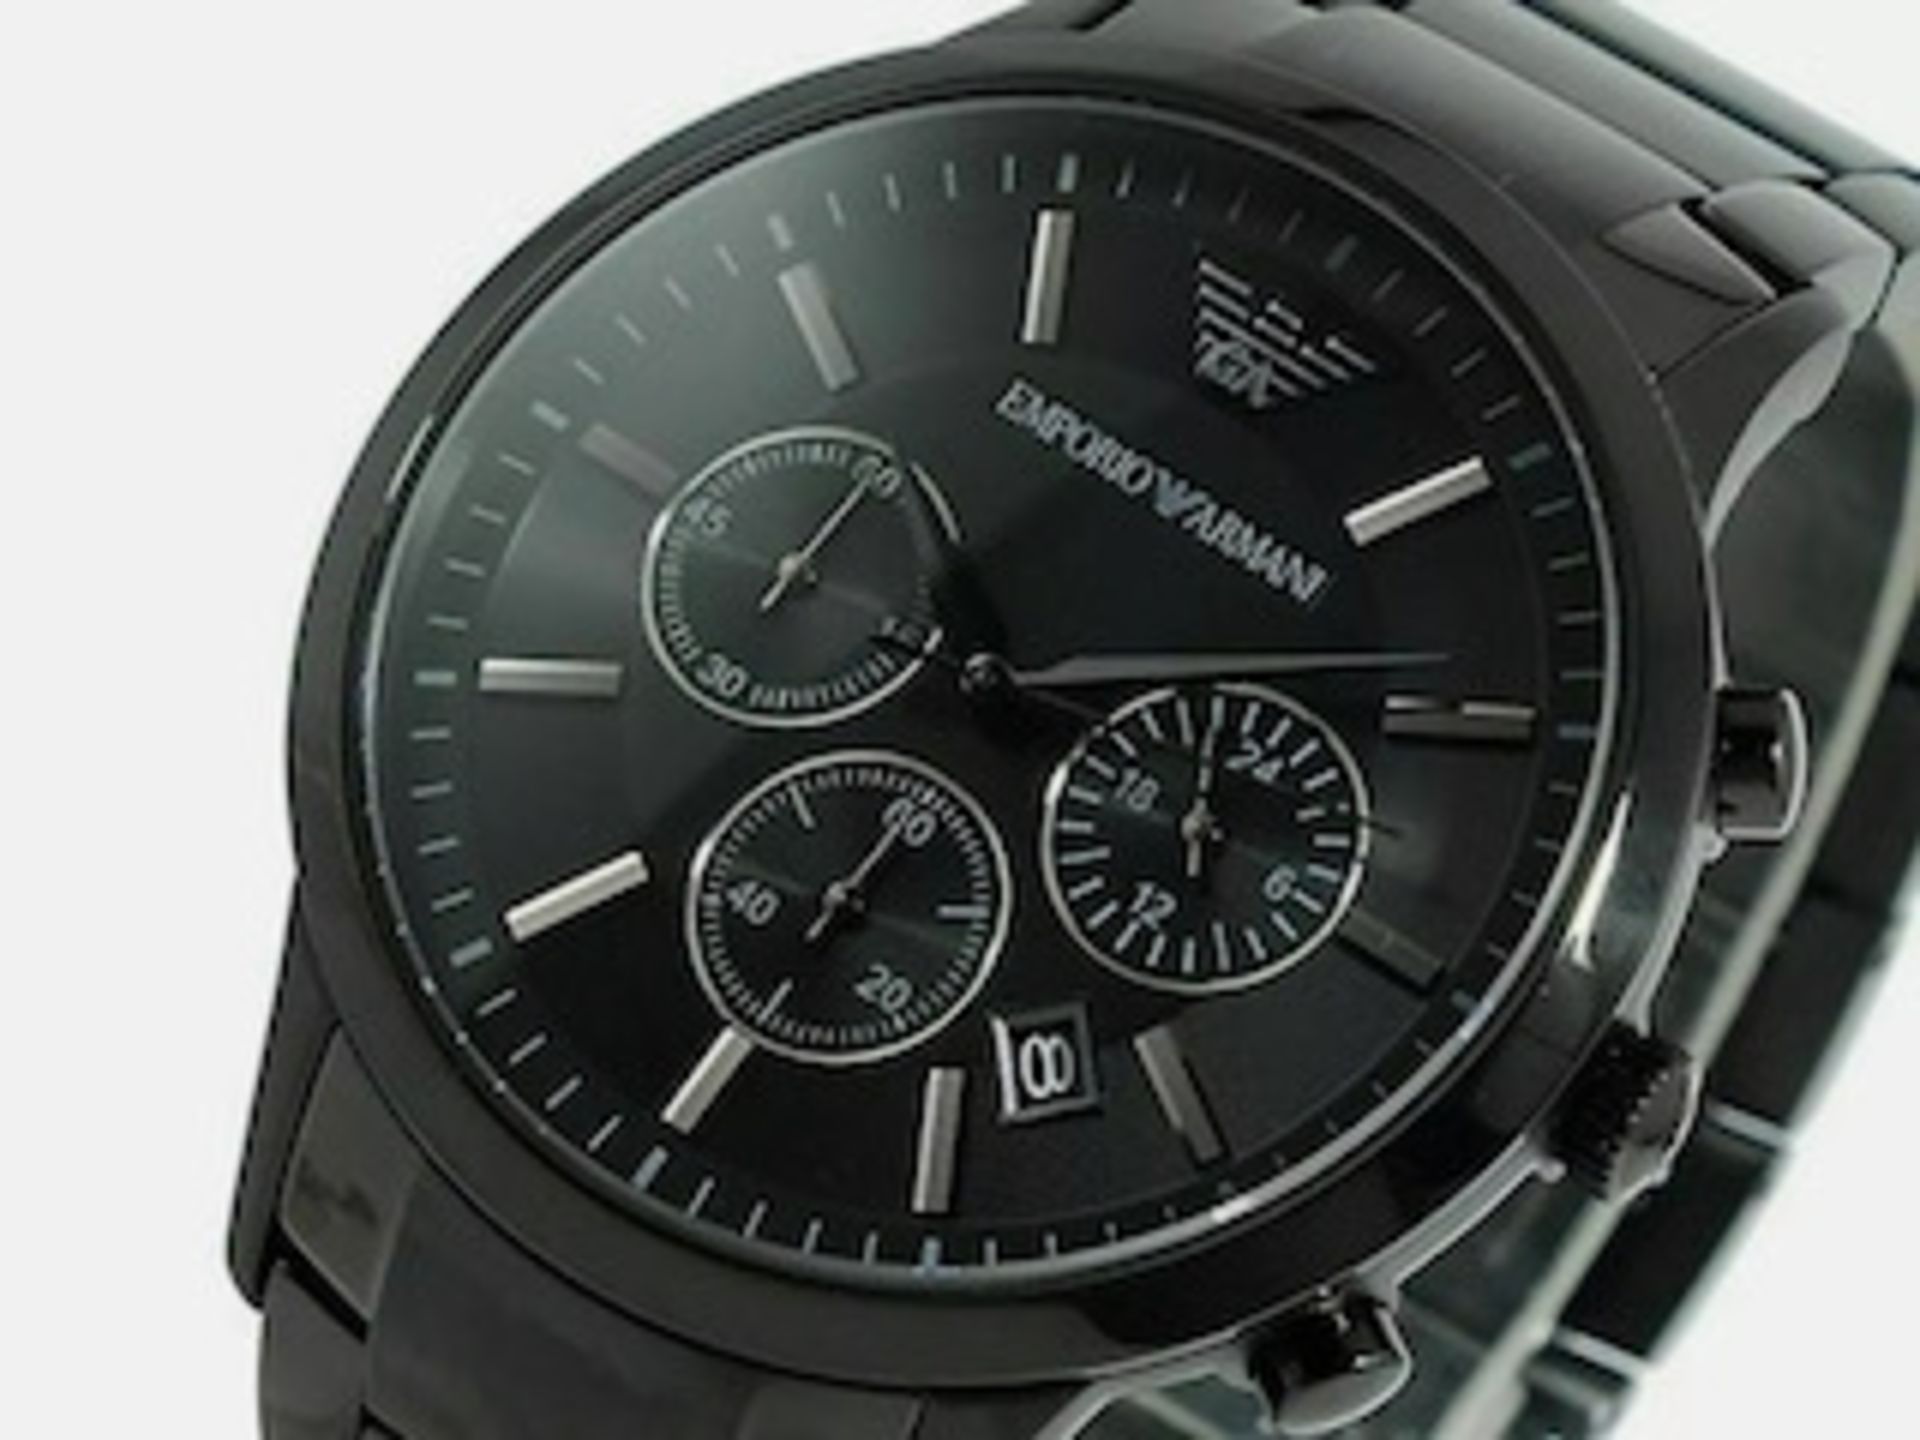 Emporio Armani AR2453 Men's Black Stainless Steel Bracelet Chronograph Watch - Image 5 of 6